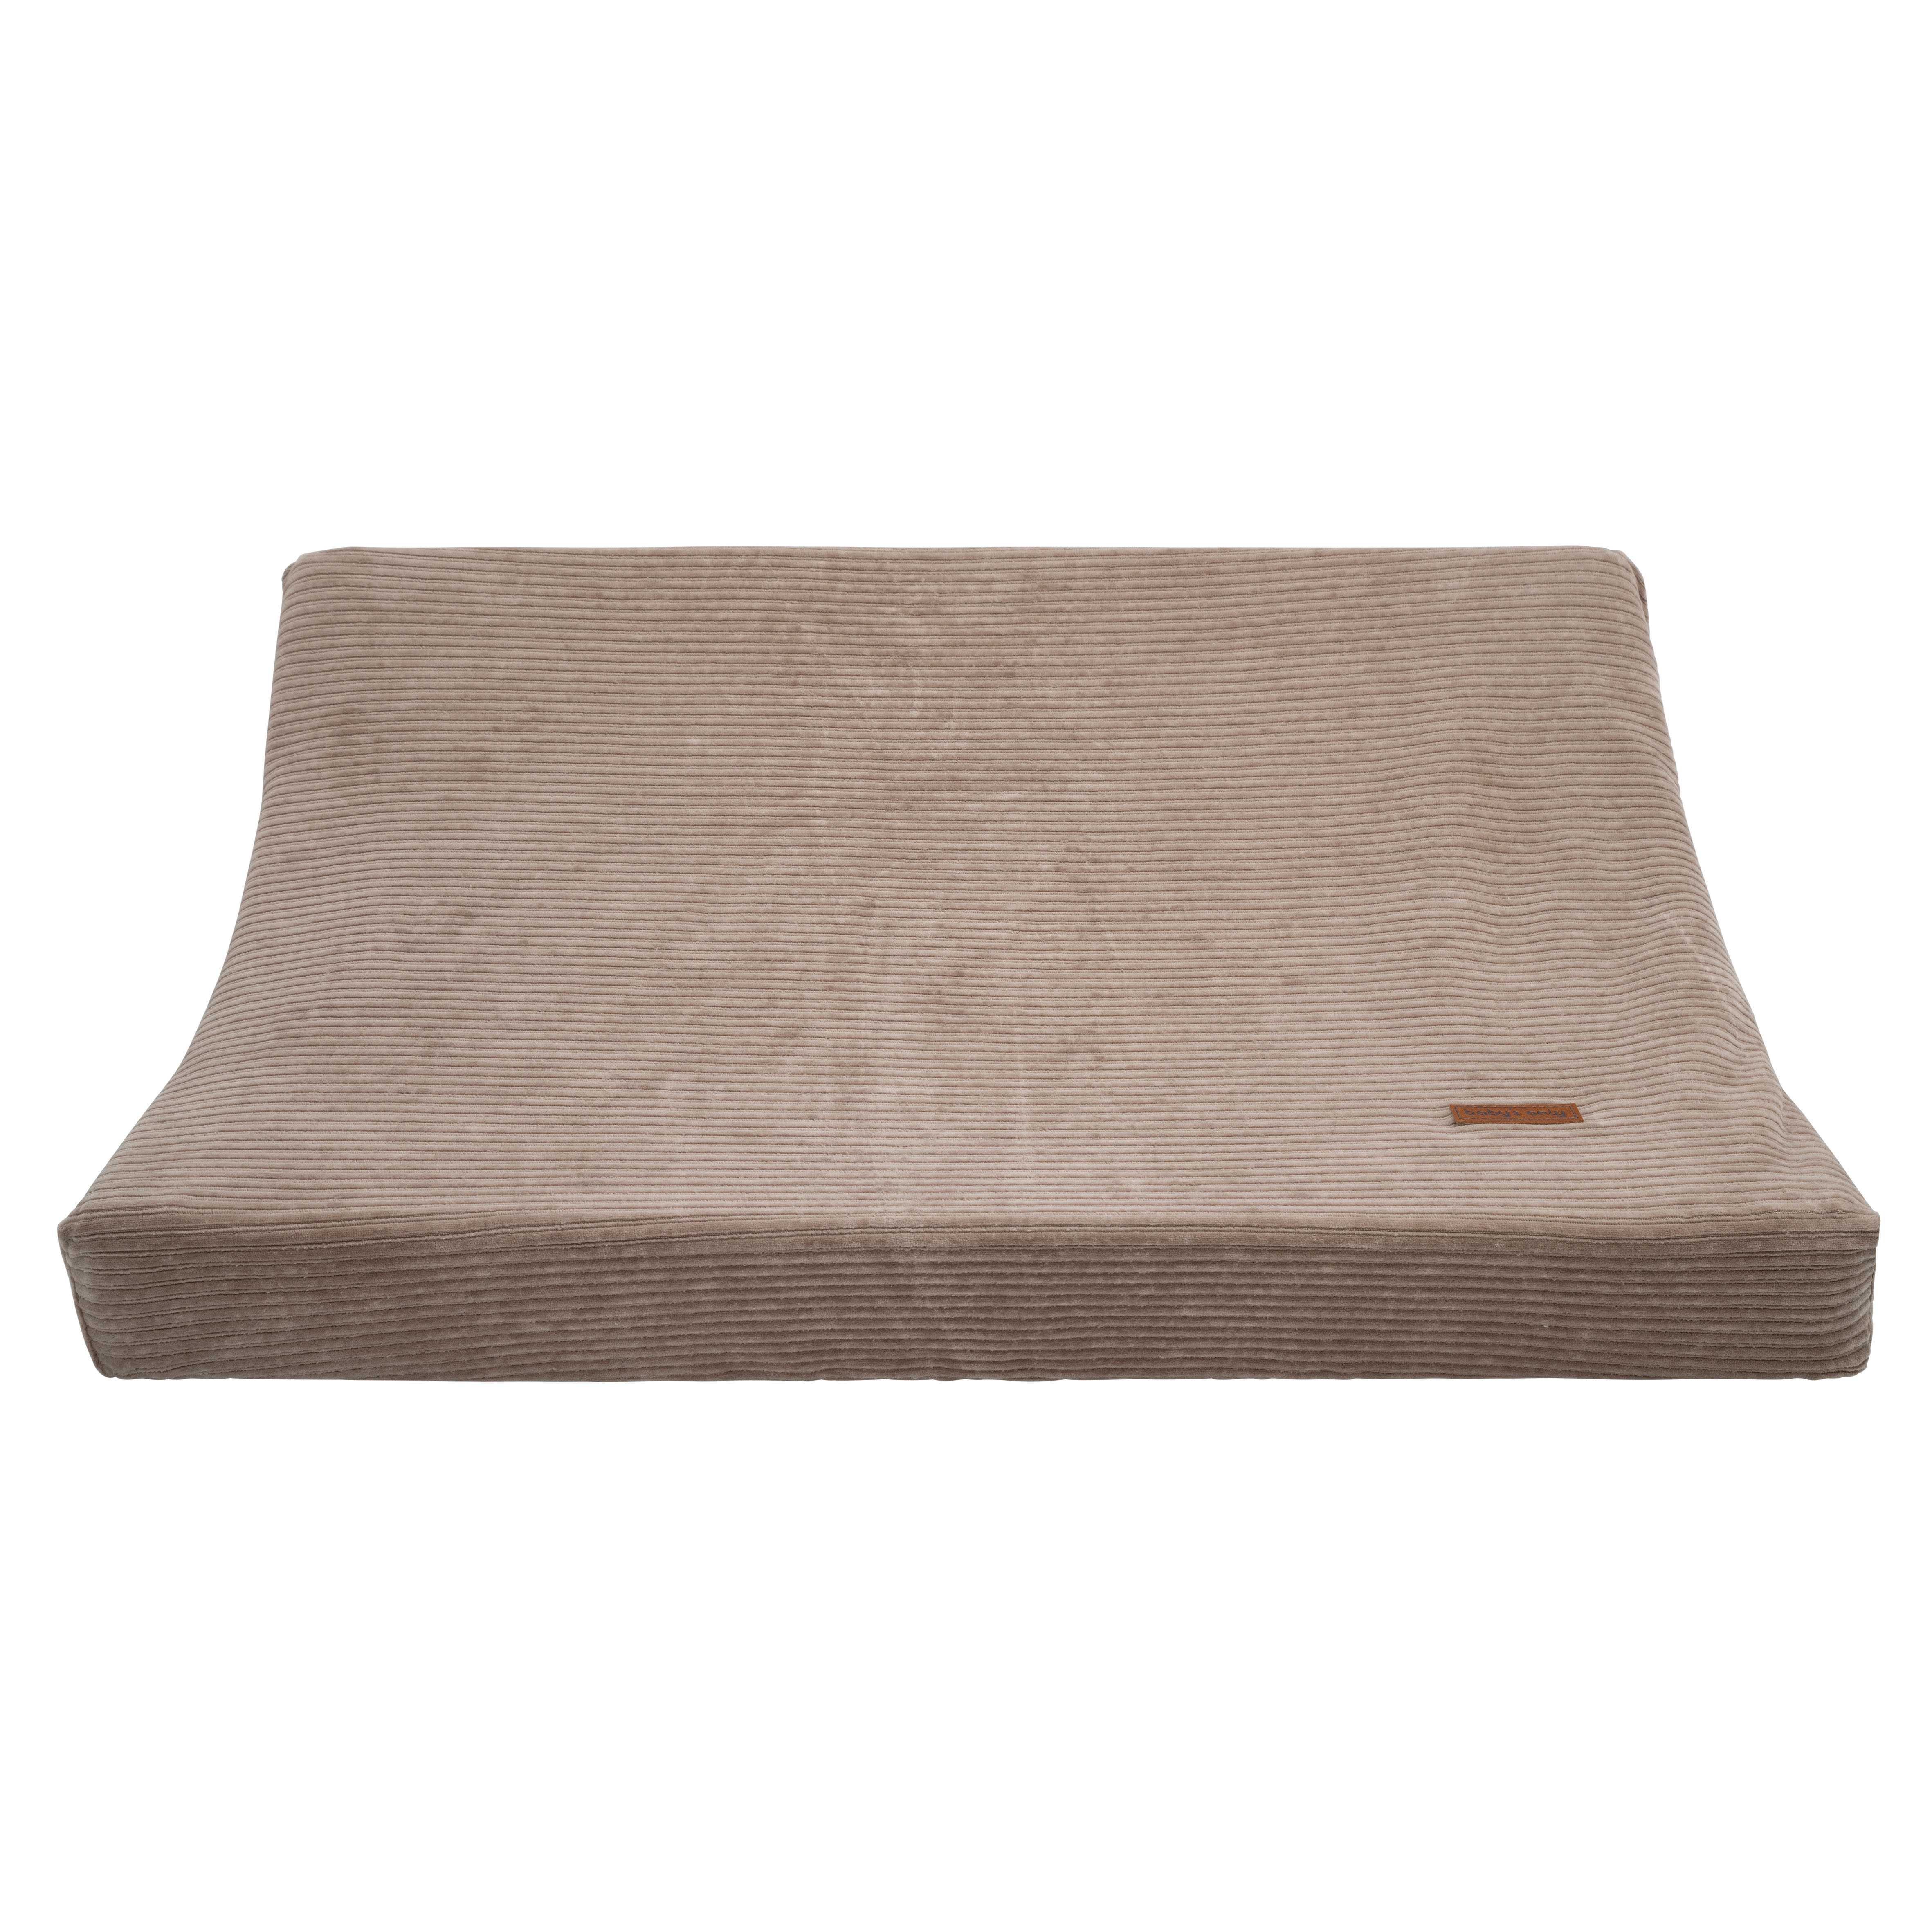 Changing pad cover Sense clay - 75x85